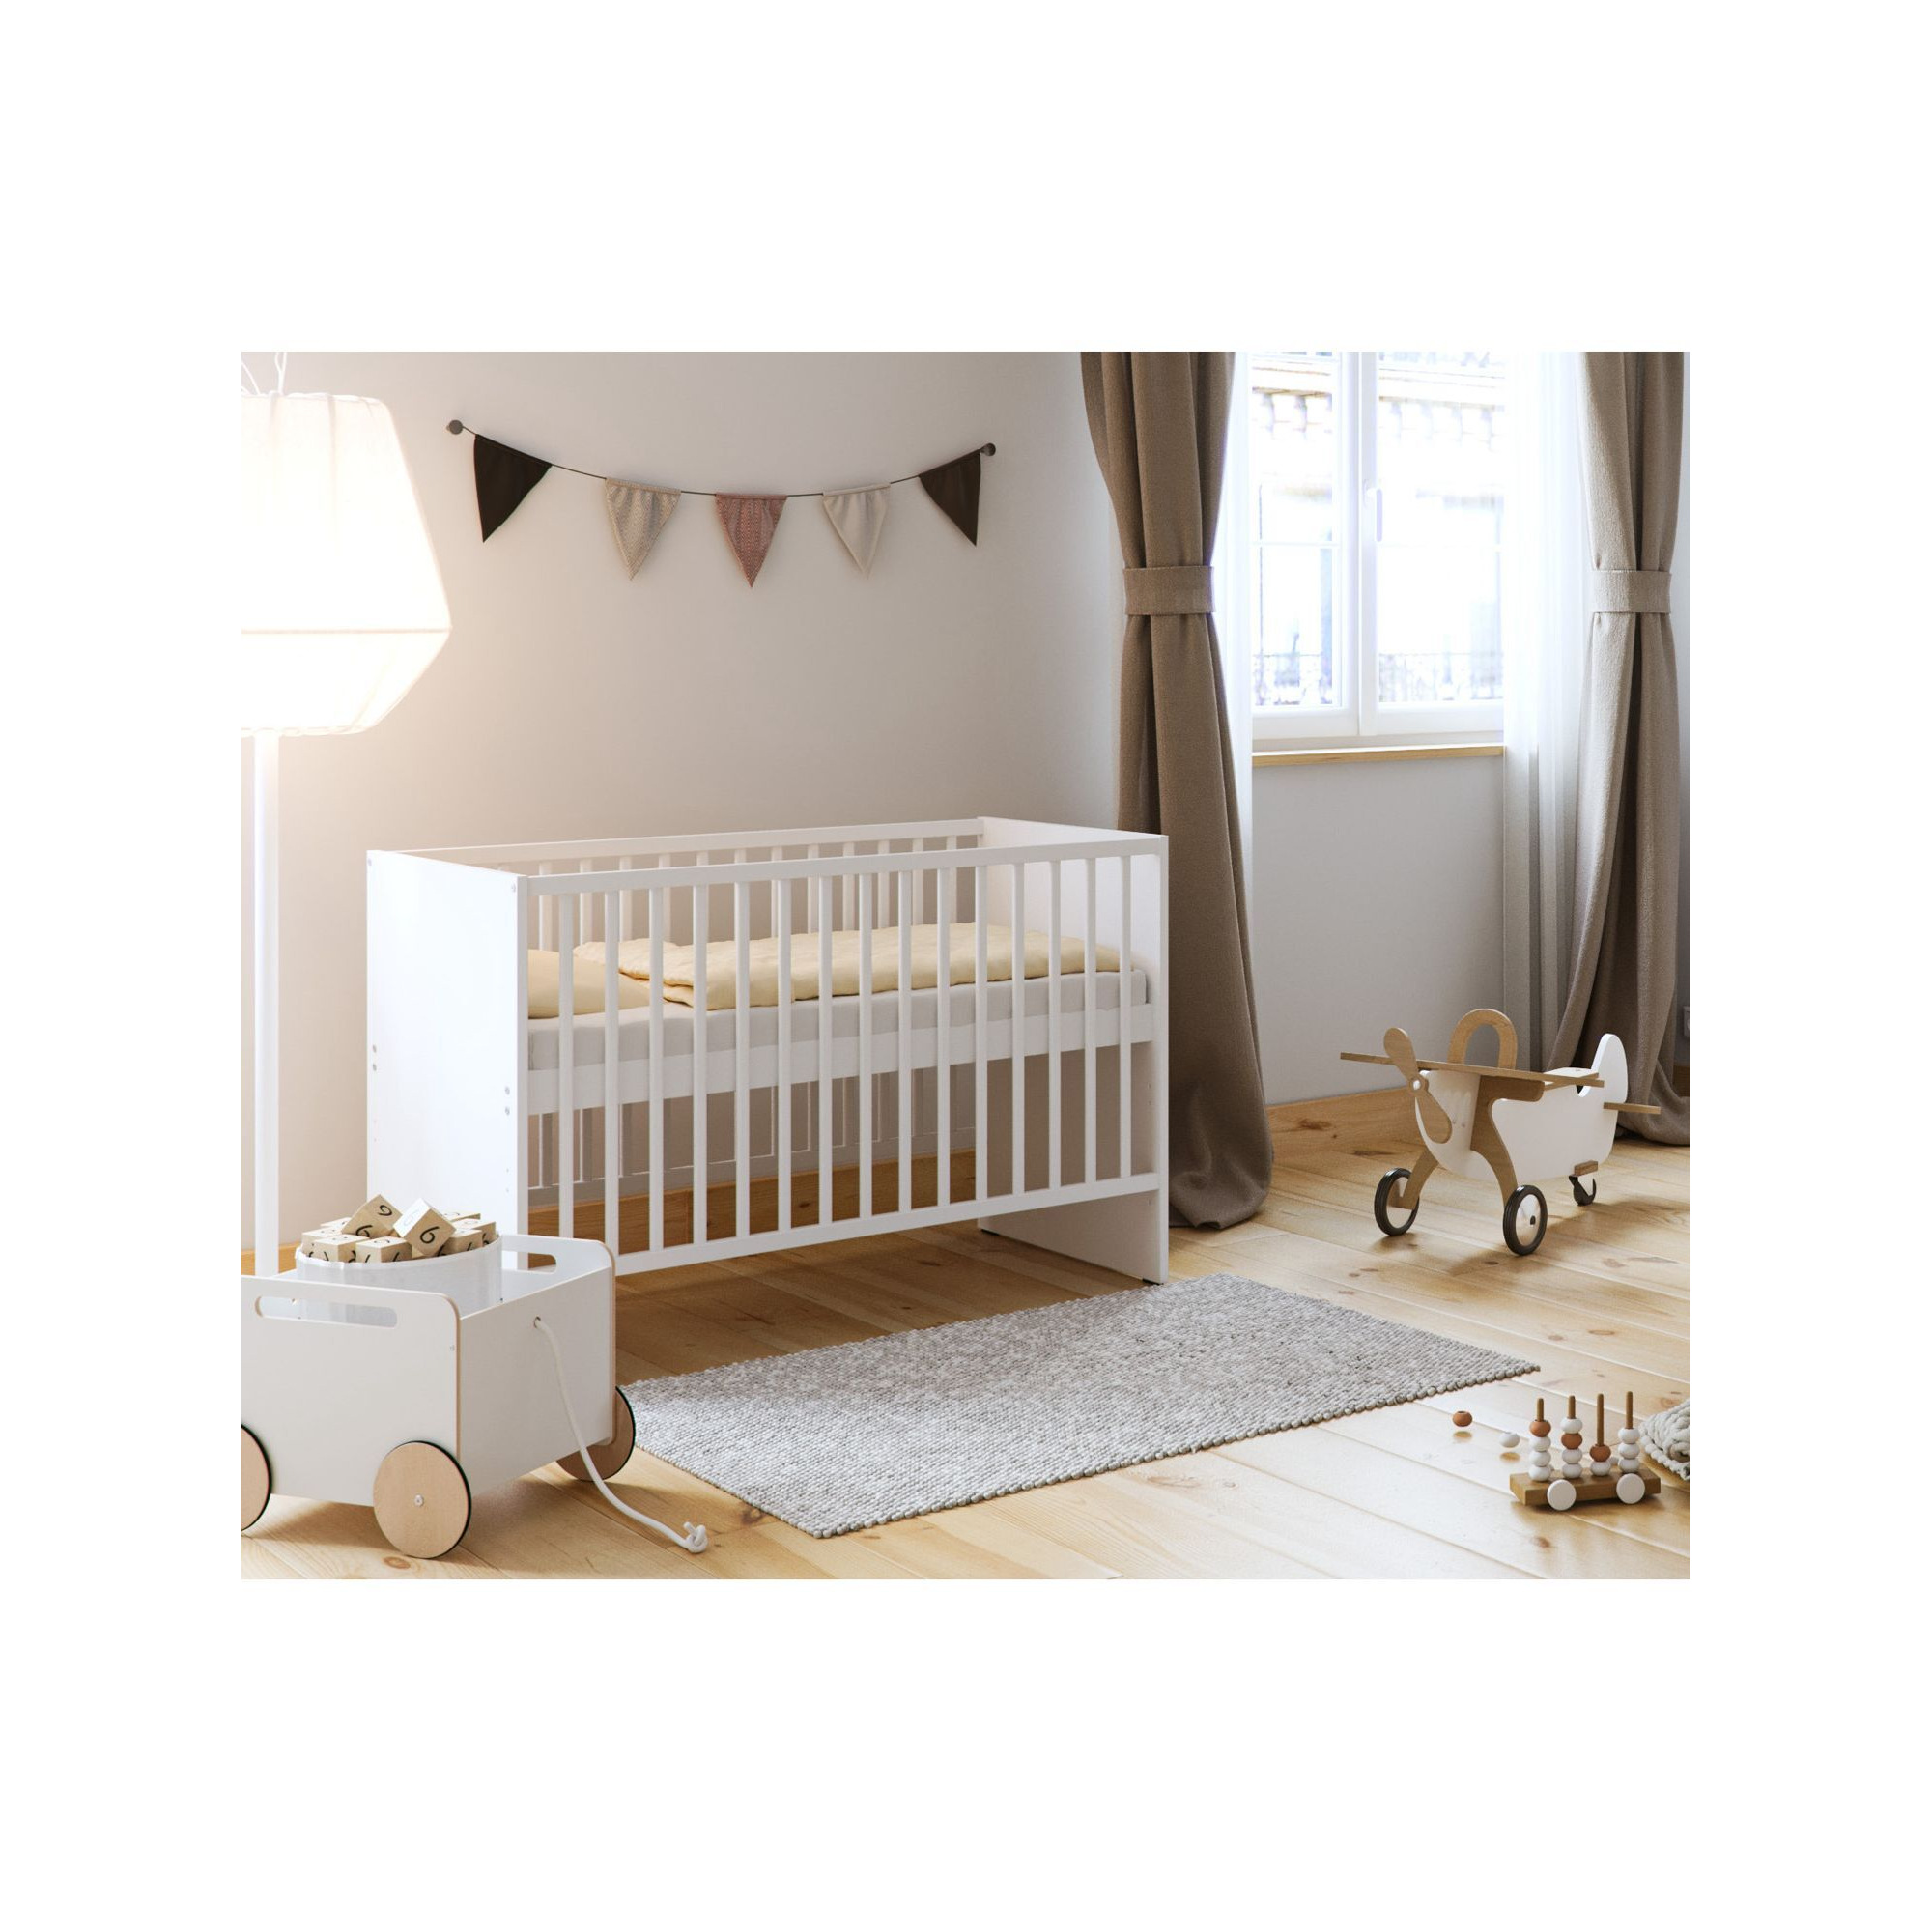 Little Acorns Athena Convertible Mini Day Bed Cot, White - image 1